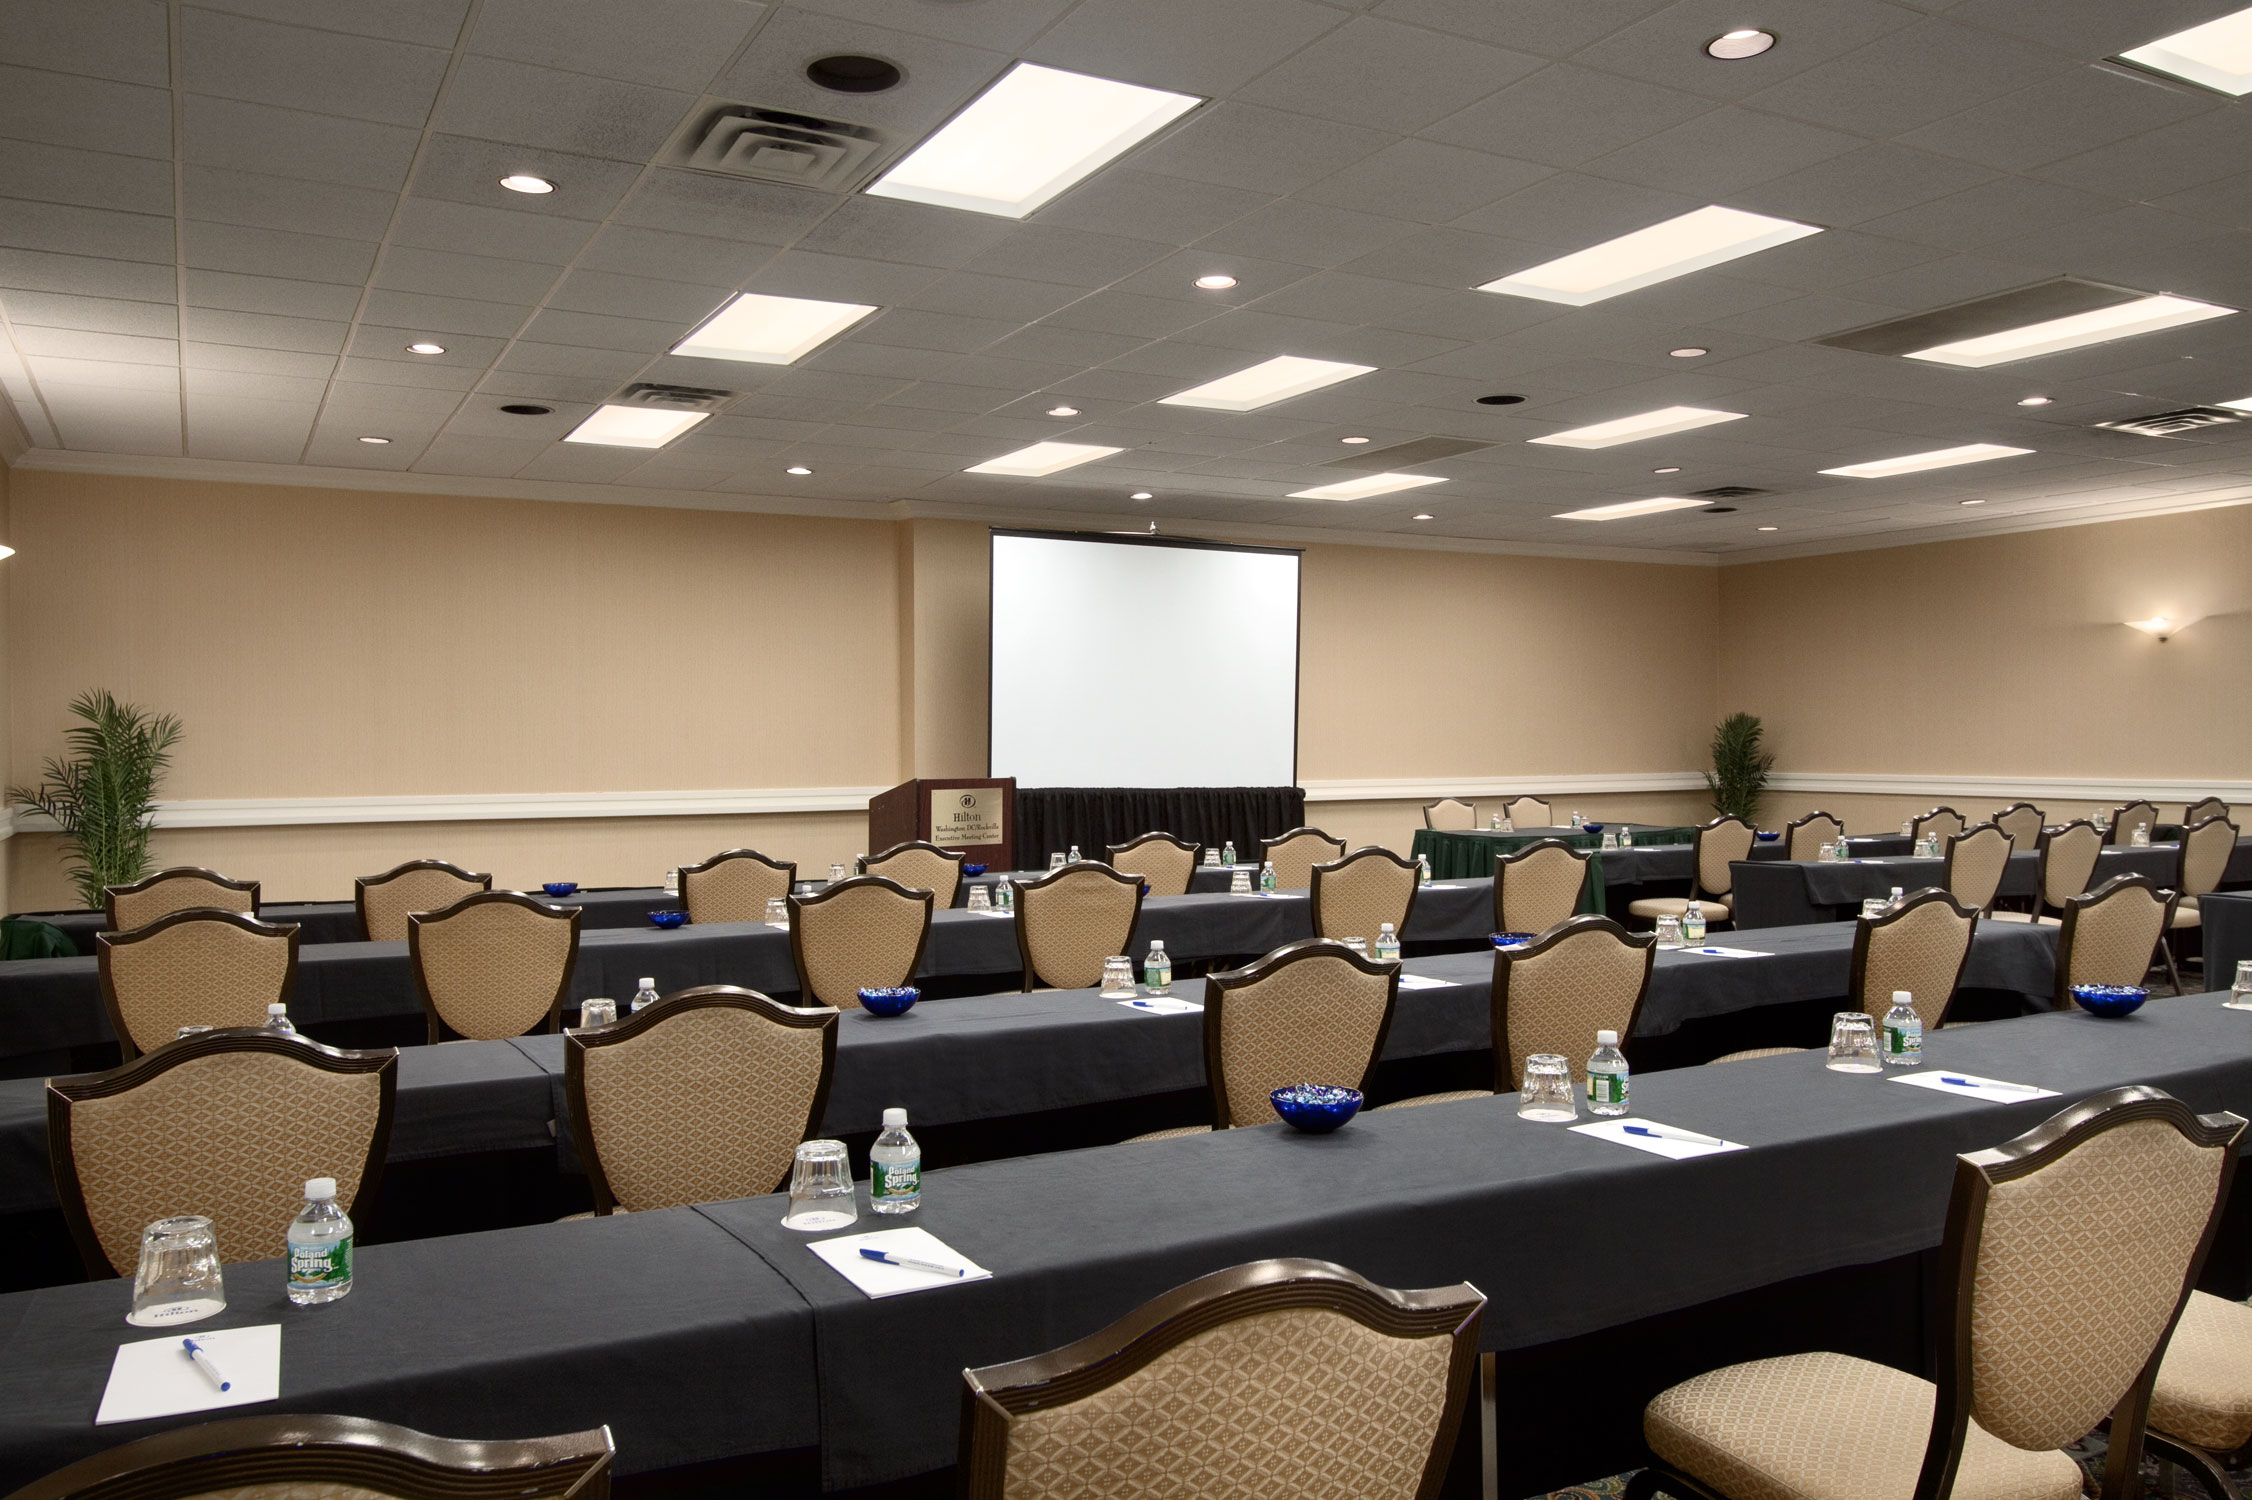 Hilton Washington DC/Rockville Hotel - classroom setting